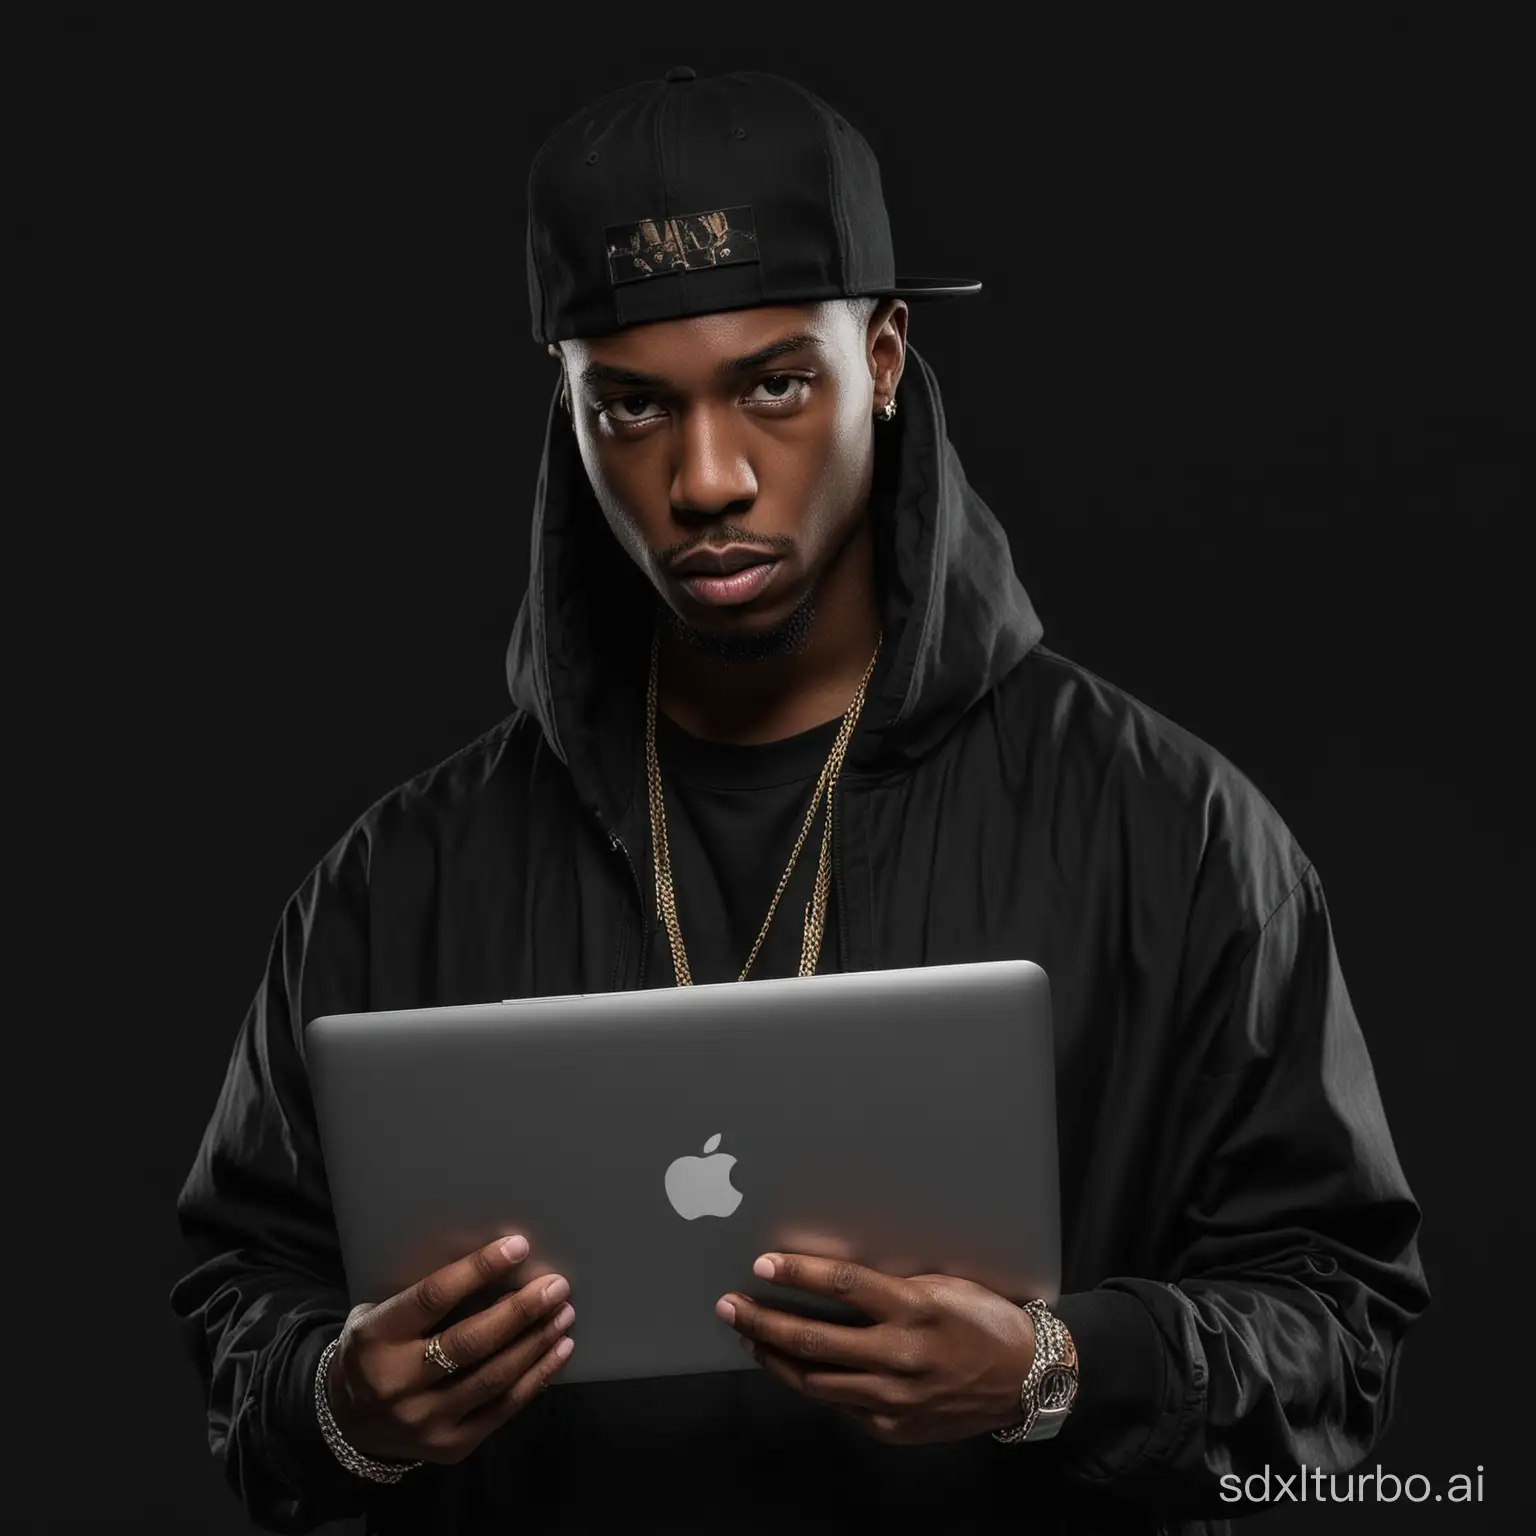 Creative-RapperDesigner-with-MacBook-on-Black-Background